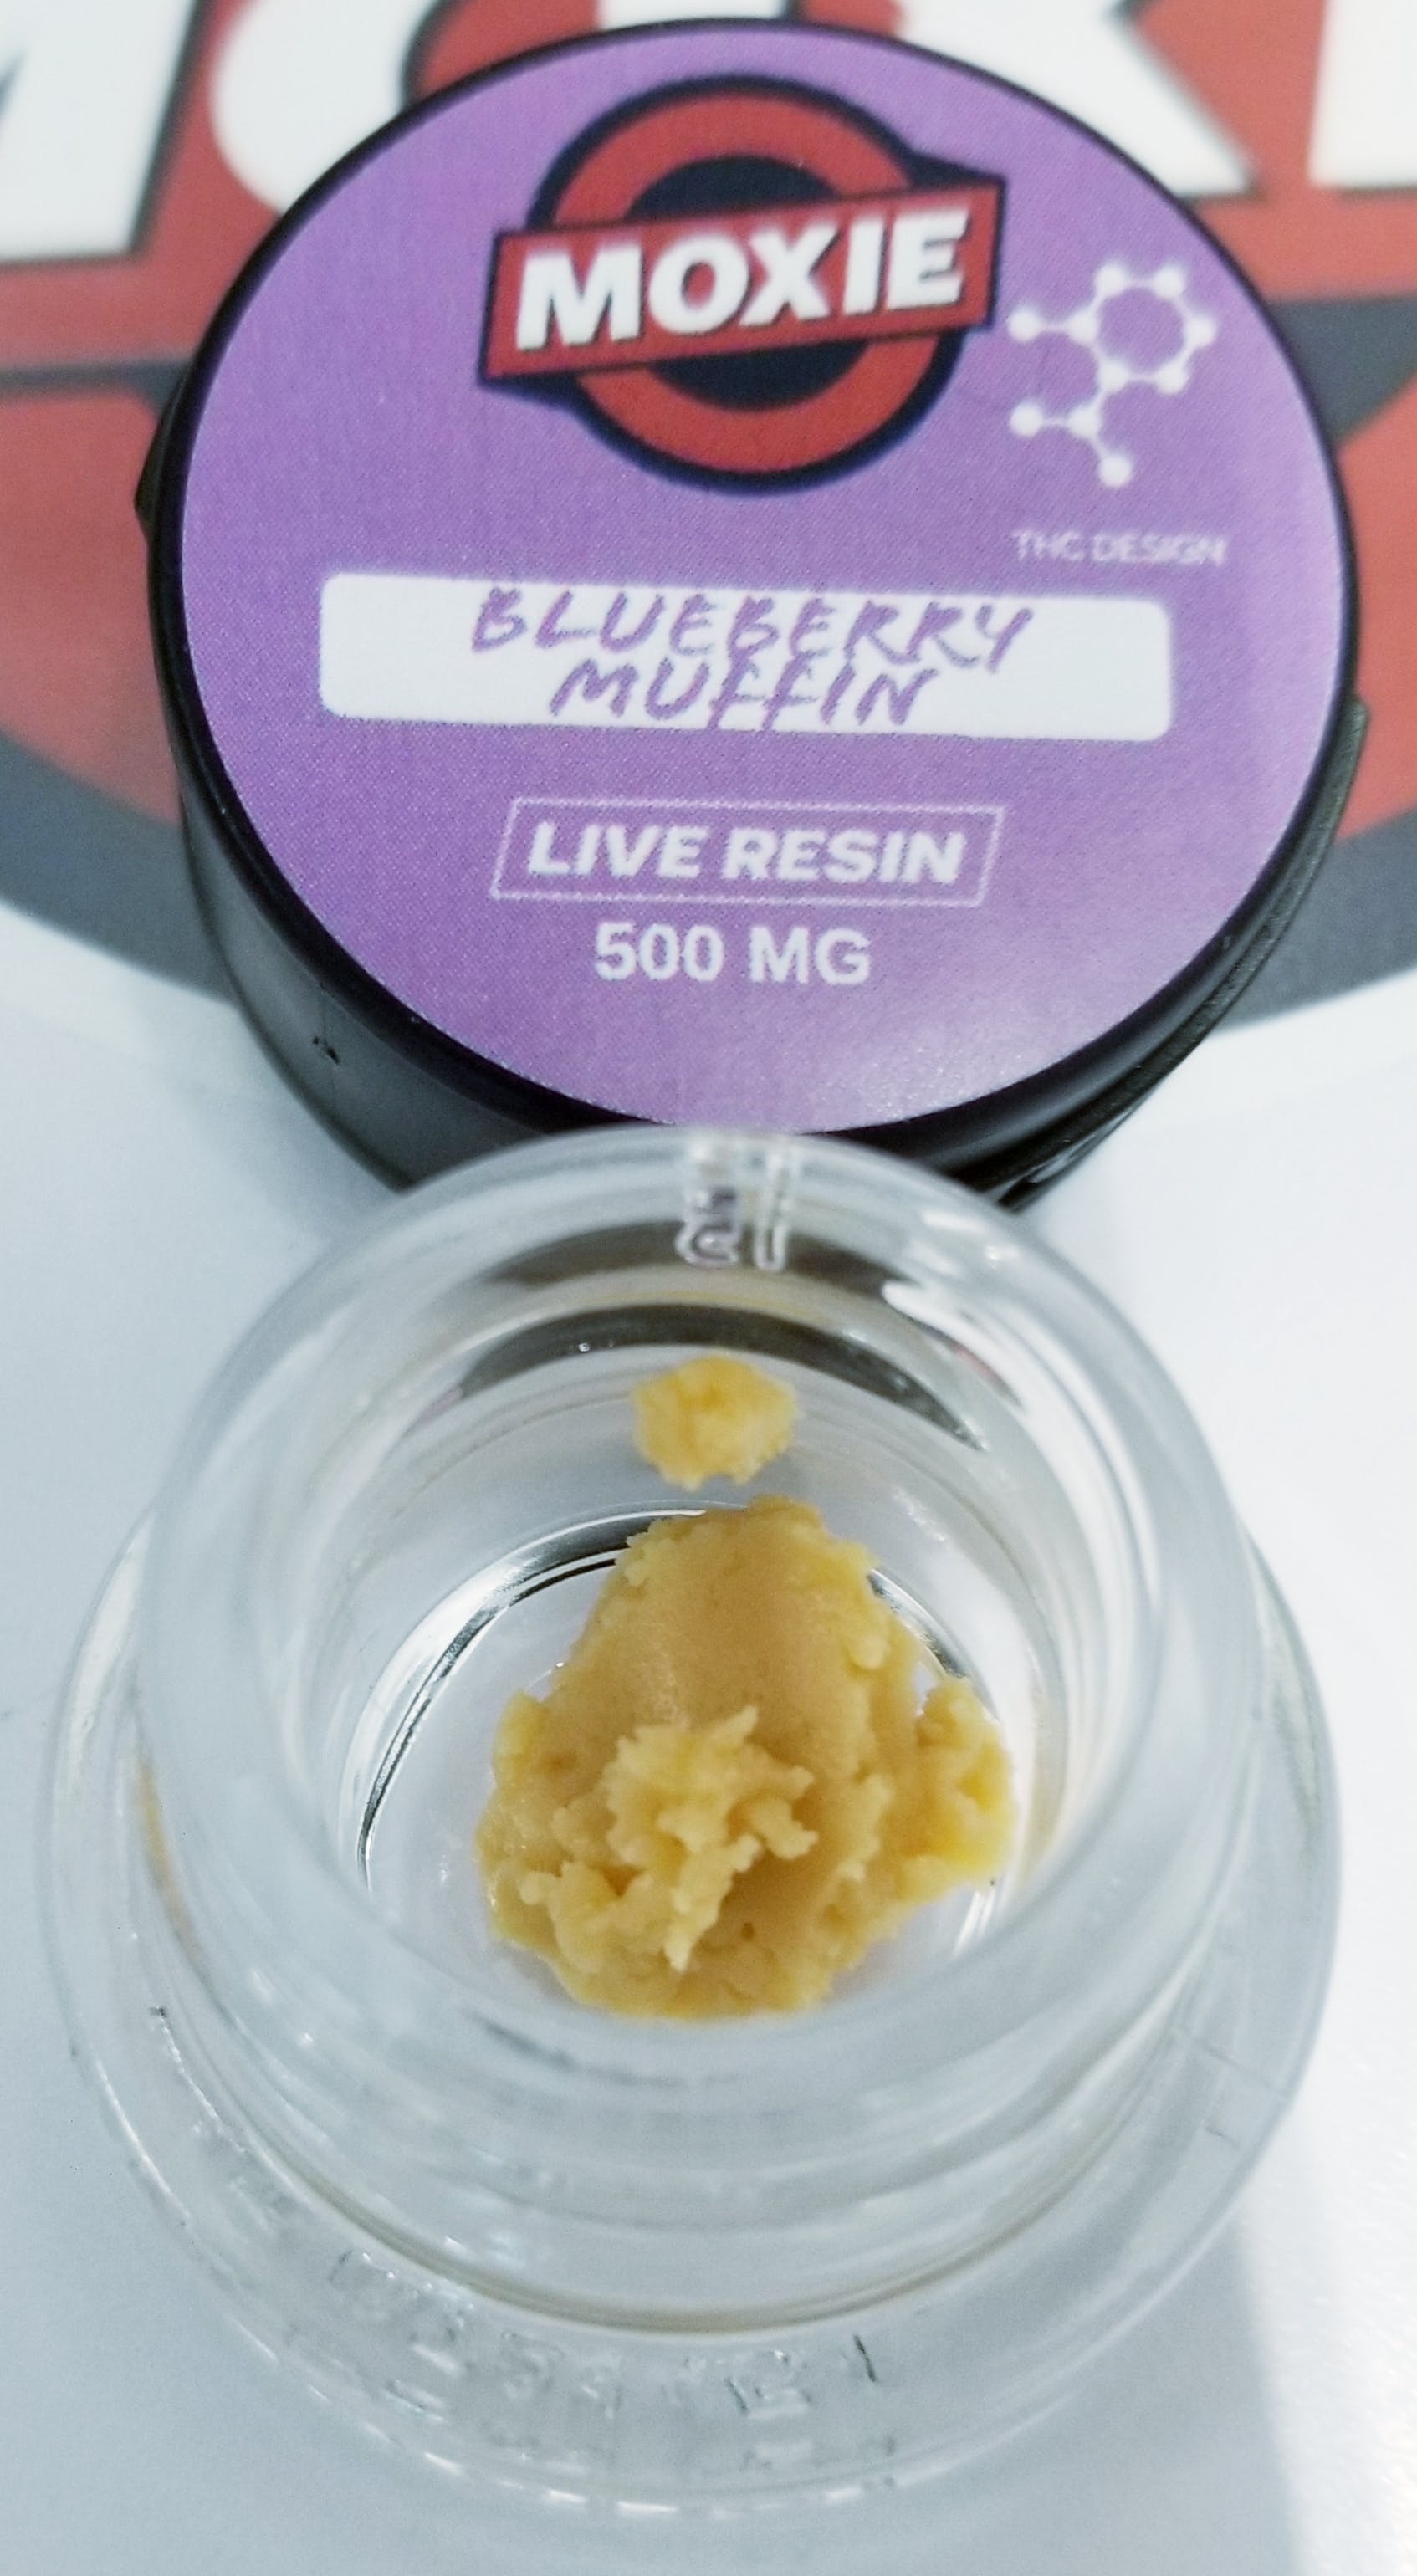 marijuana-dispensaries-westside-cllctv-in-perris-blueberry-muffin-live-resin-badder